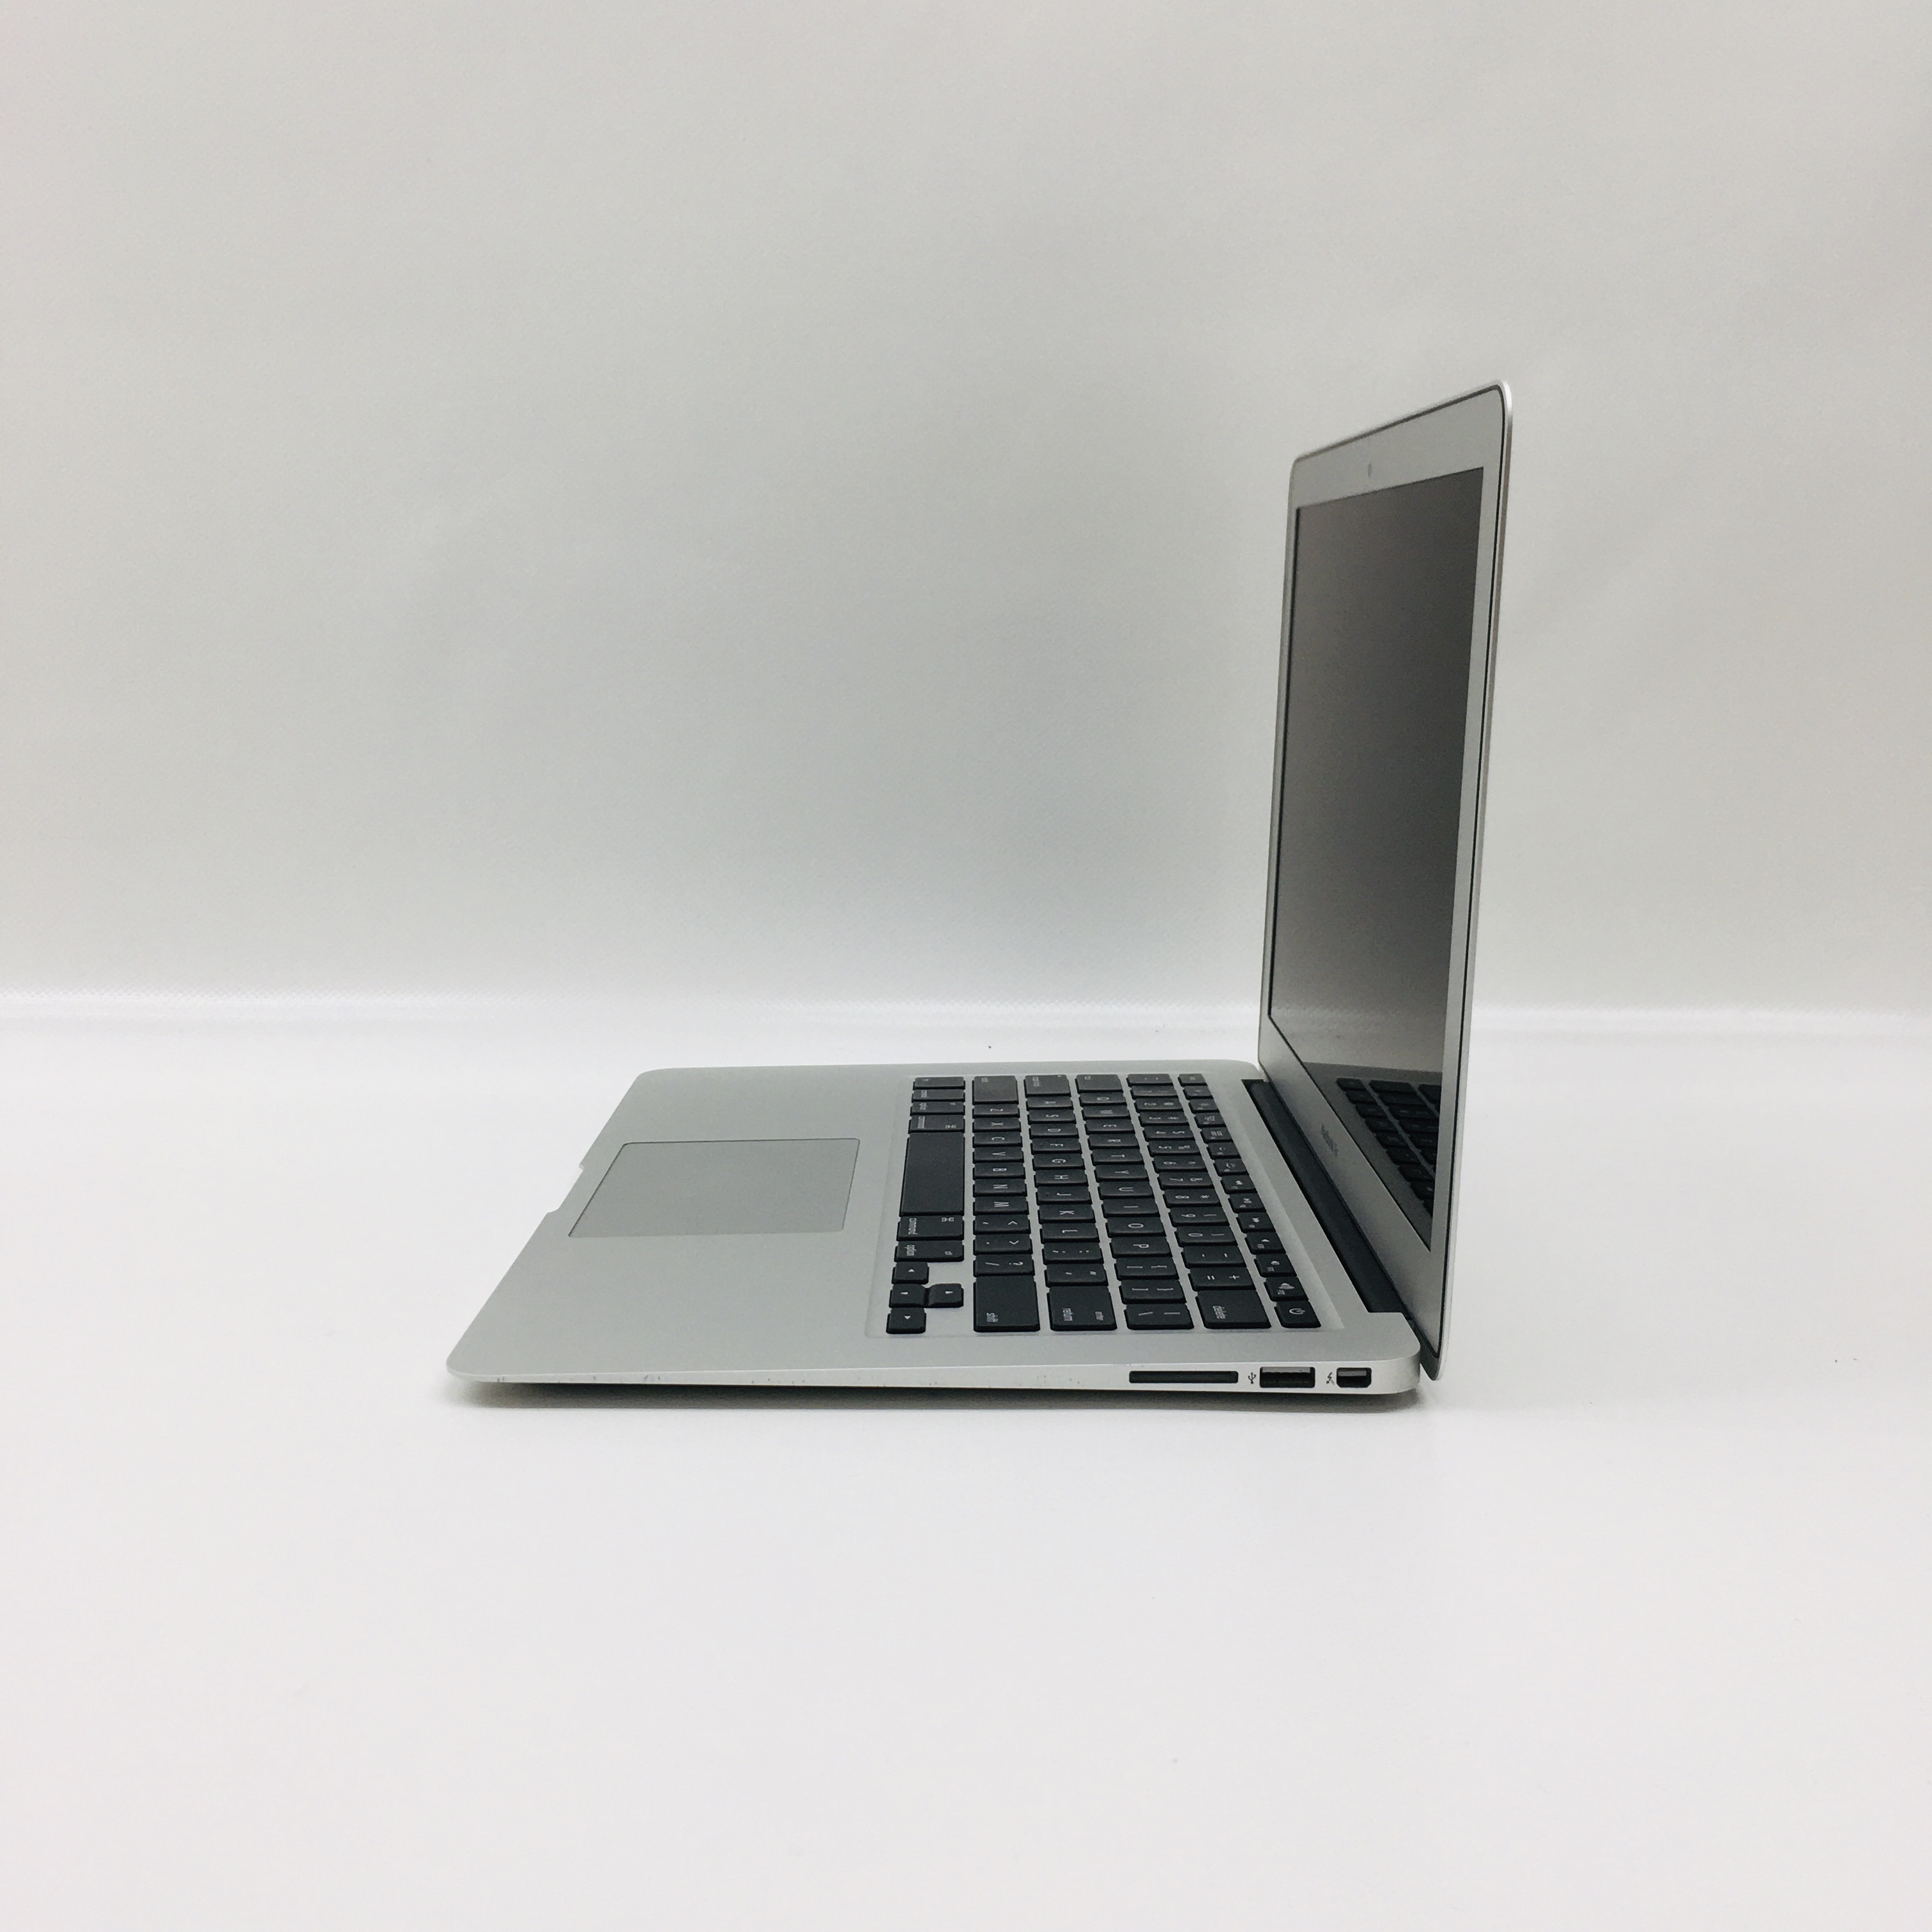 MacBook Air 13" Early 2015 (Intel Core i5 1.6 GHz 4 GB RAM 128 GB SSD), Intel Core i5 1.6 GHz, 4 GB RAM, 128 GB SSD, image 3